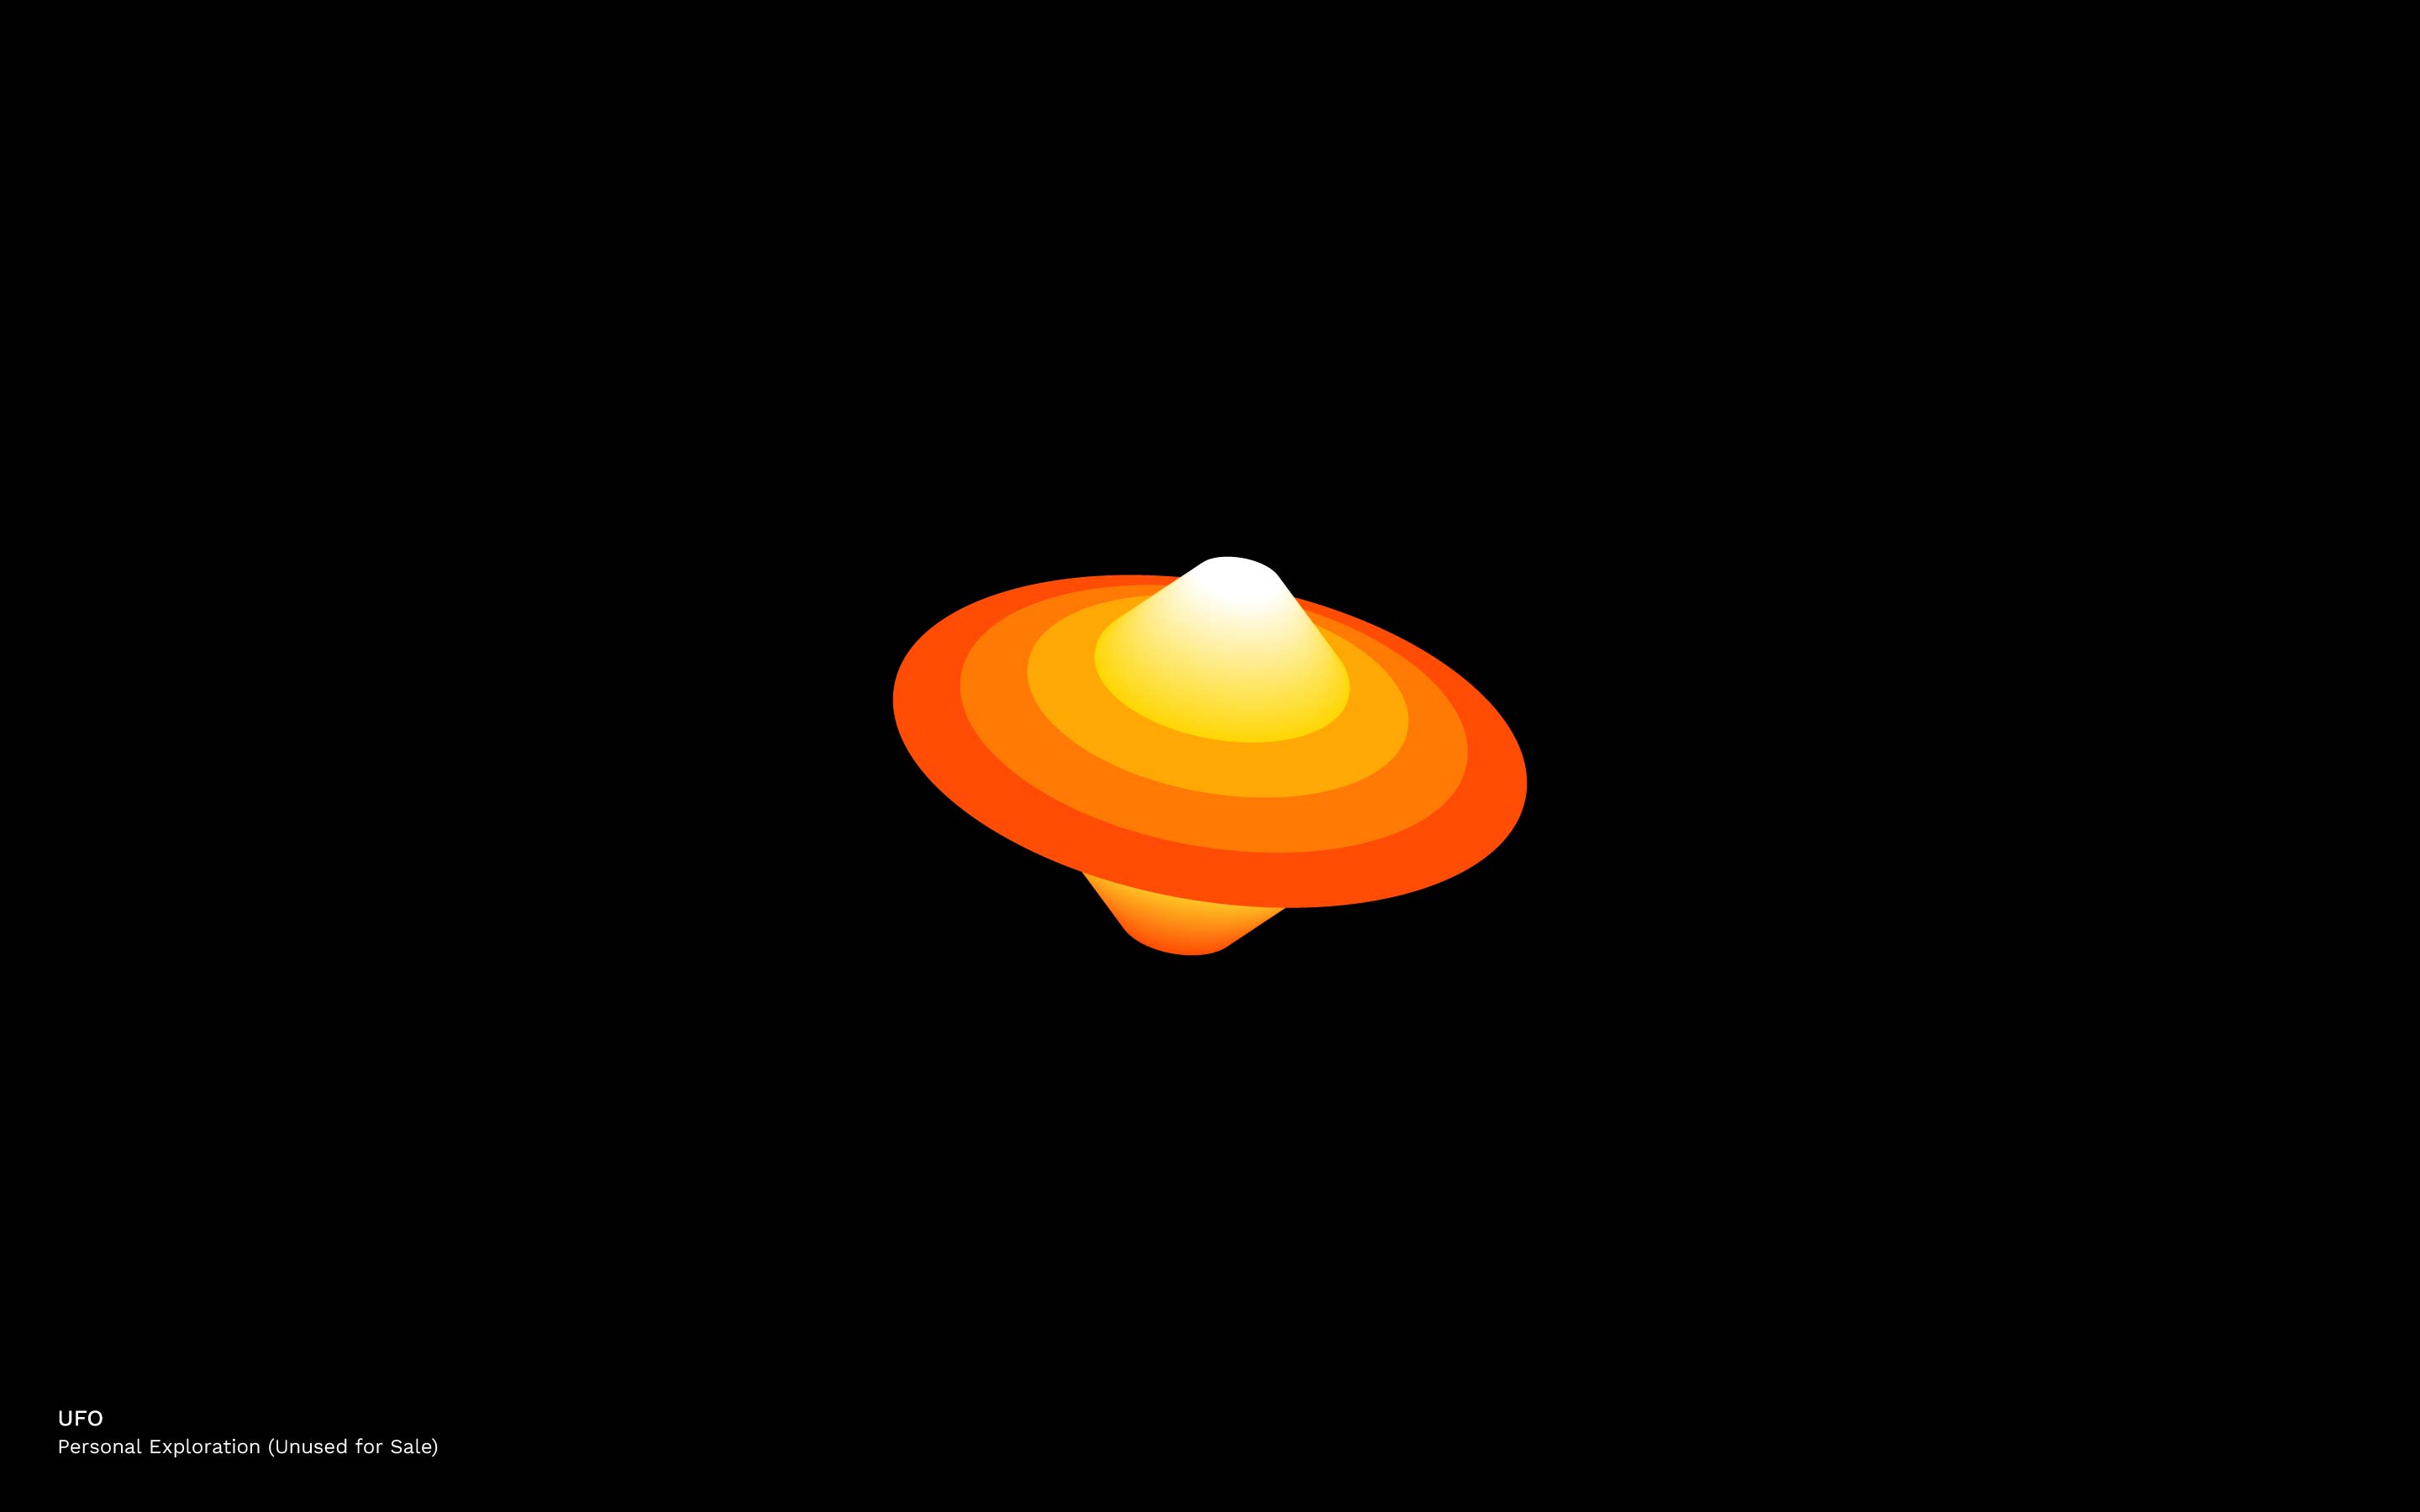 ufo logo design with modern approach in orange colors by mihai dolganiuc design